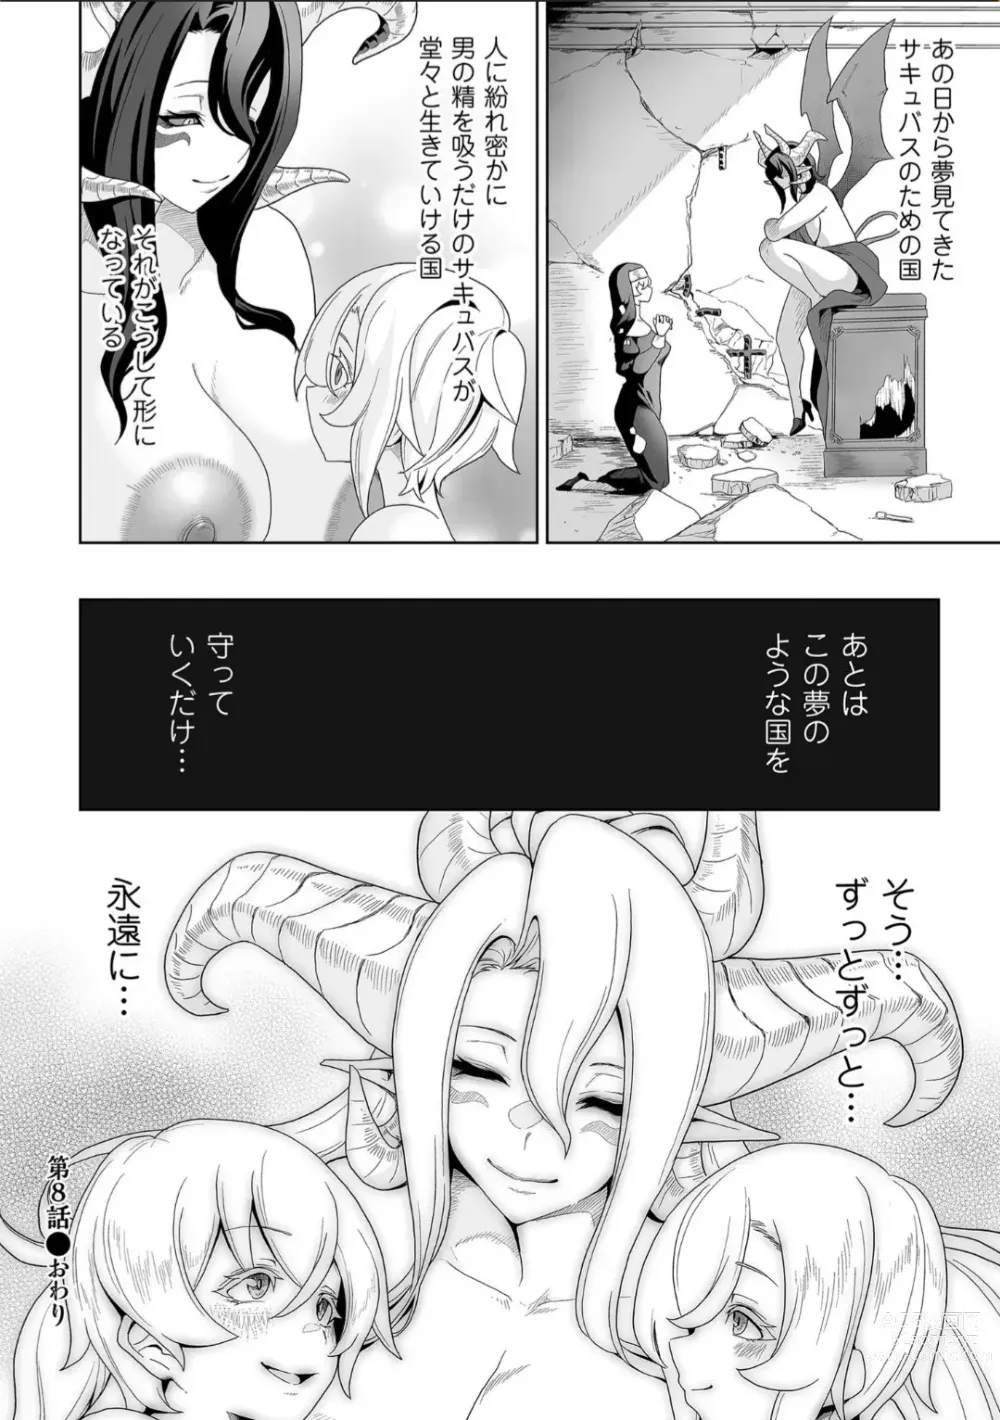 Page 212 of manga Succubus Kingdom